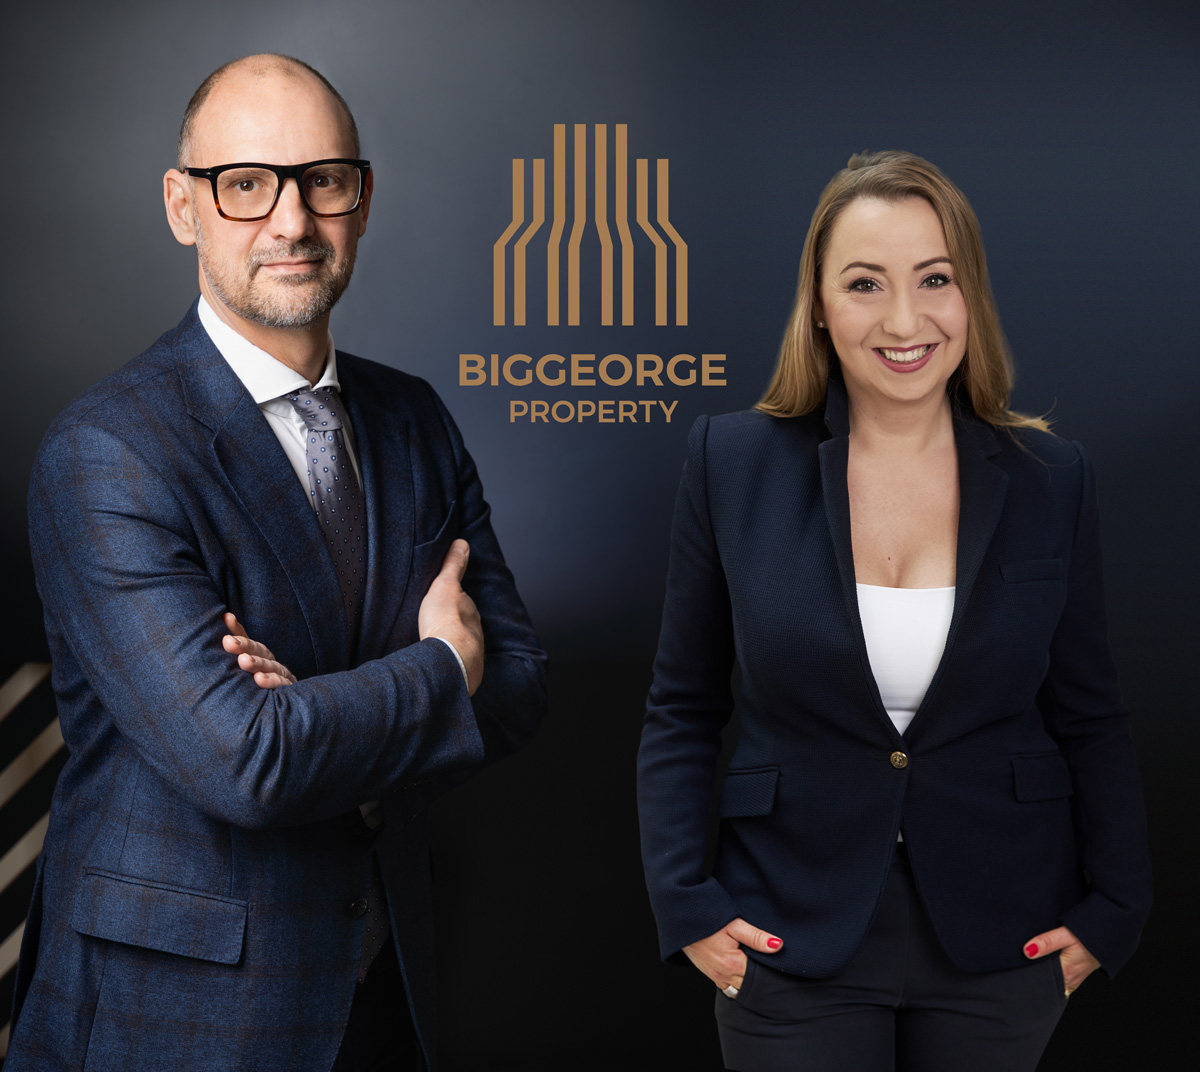 Biggeorge Adds 2 New Directors to Top Management